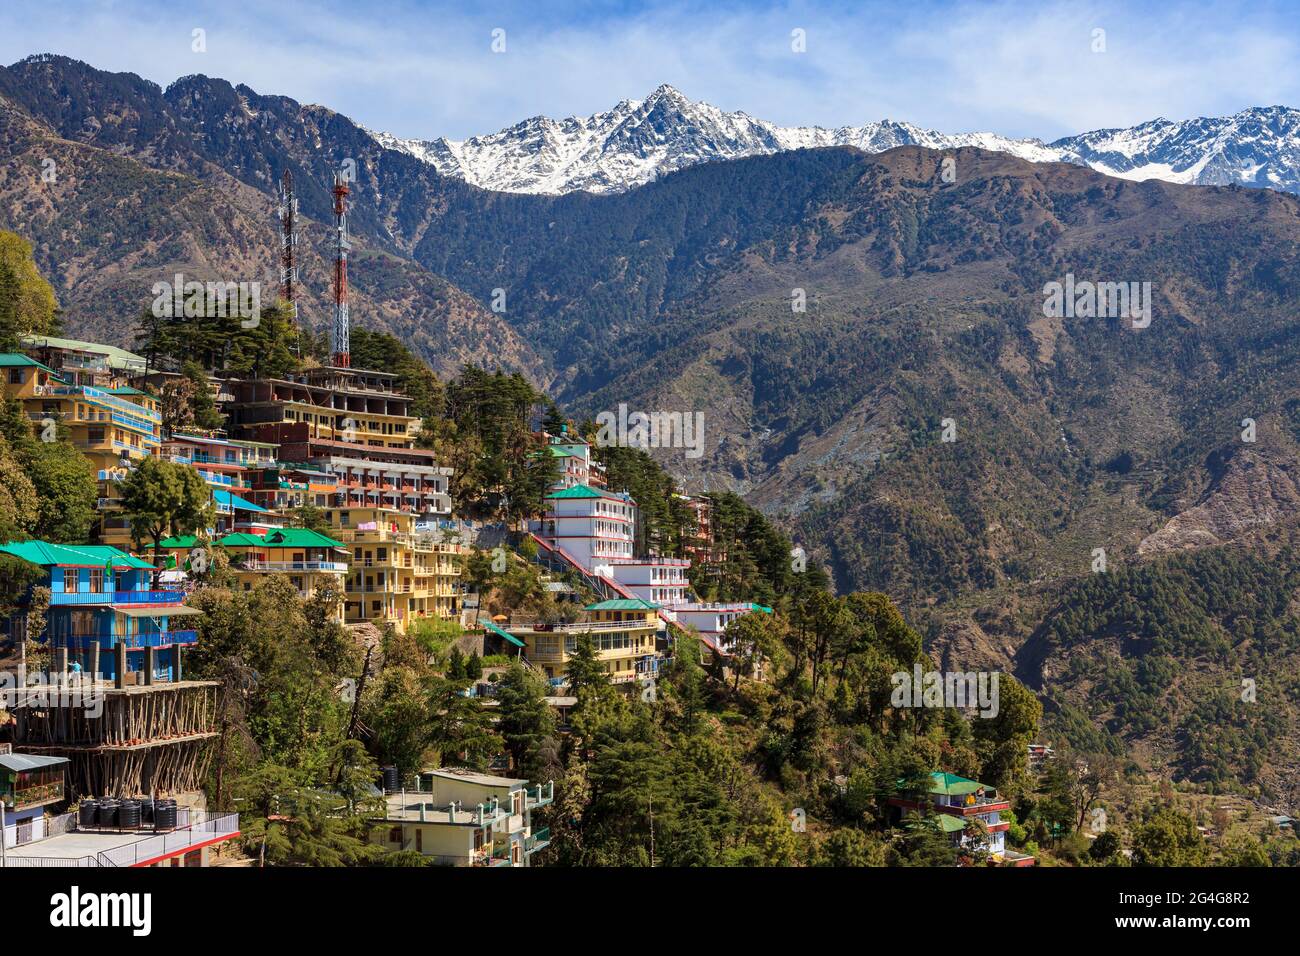 La ville de dharamsala en Inde Banque D'Images